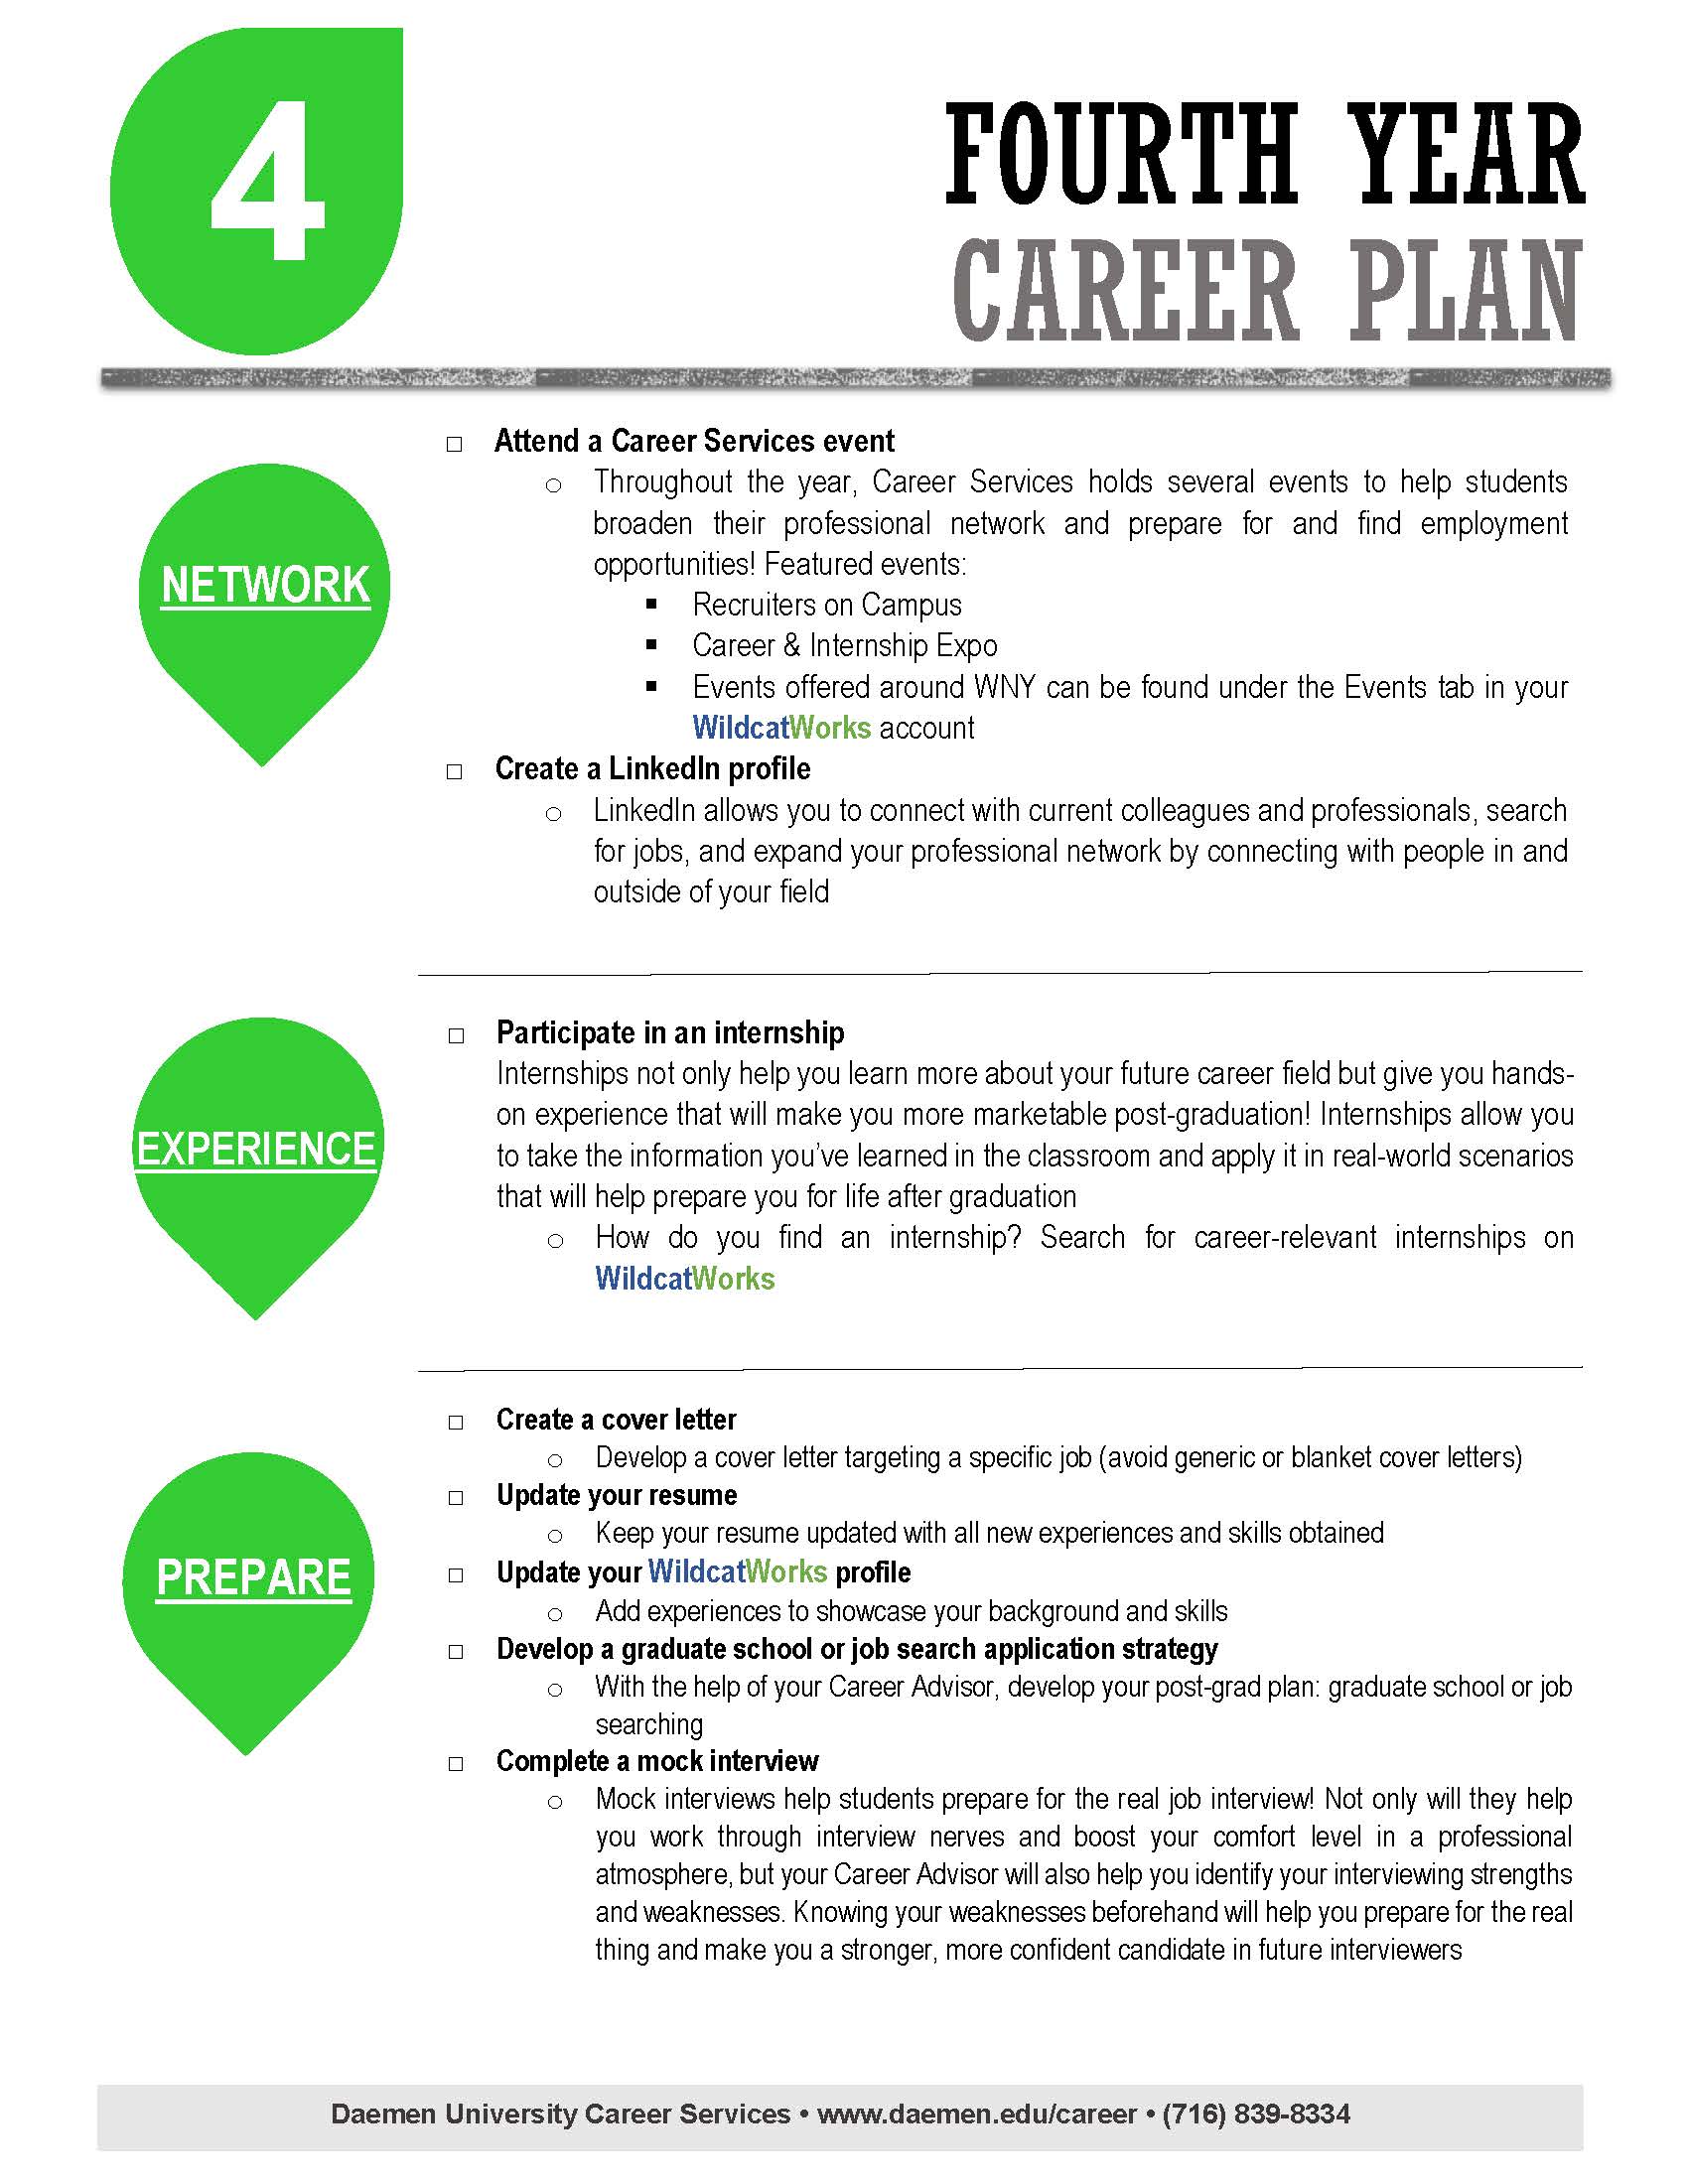 Fourth Year Career Plan